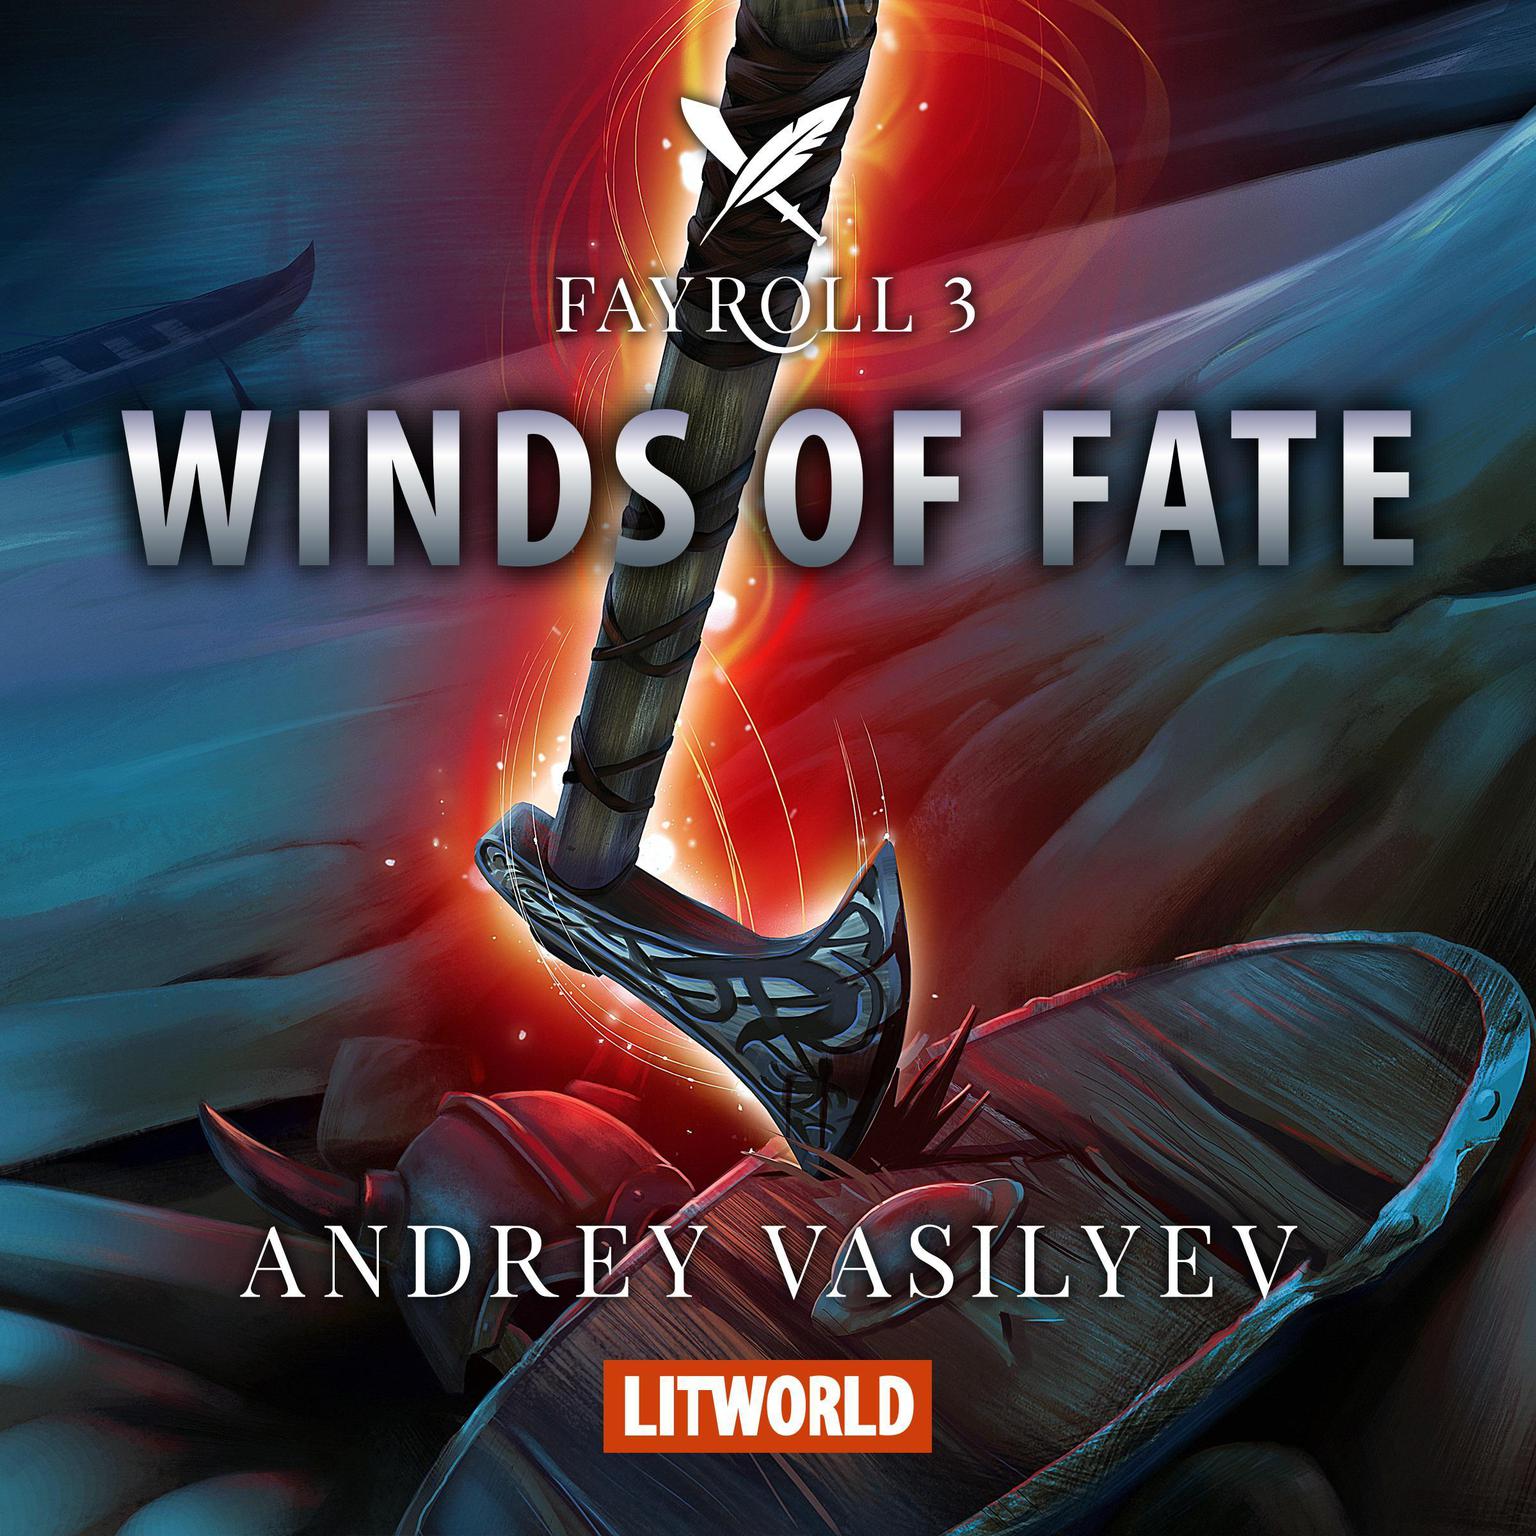 Winds of Fate Audiobook, by Andrey Vasilyev